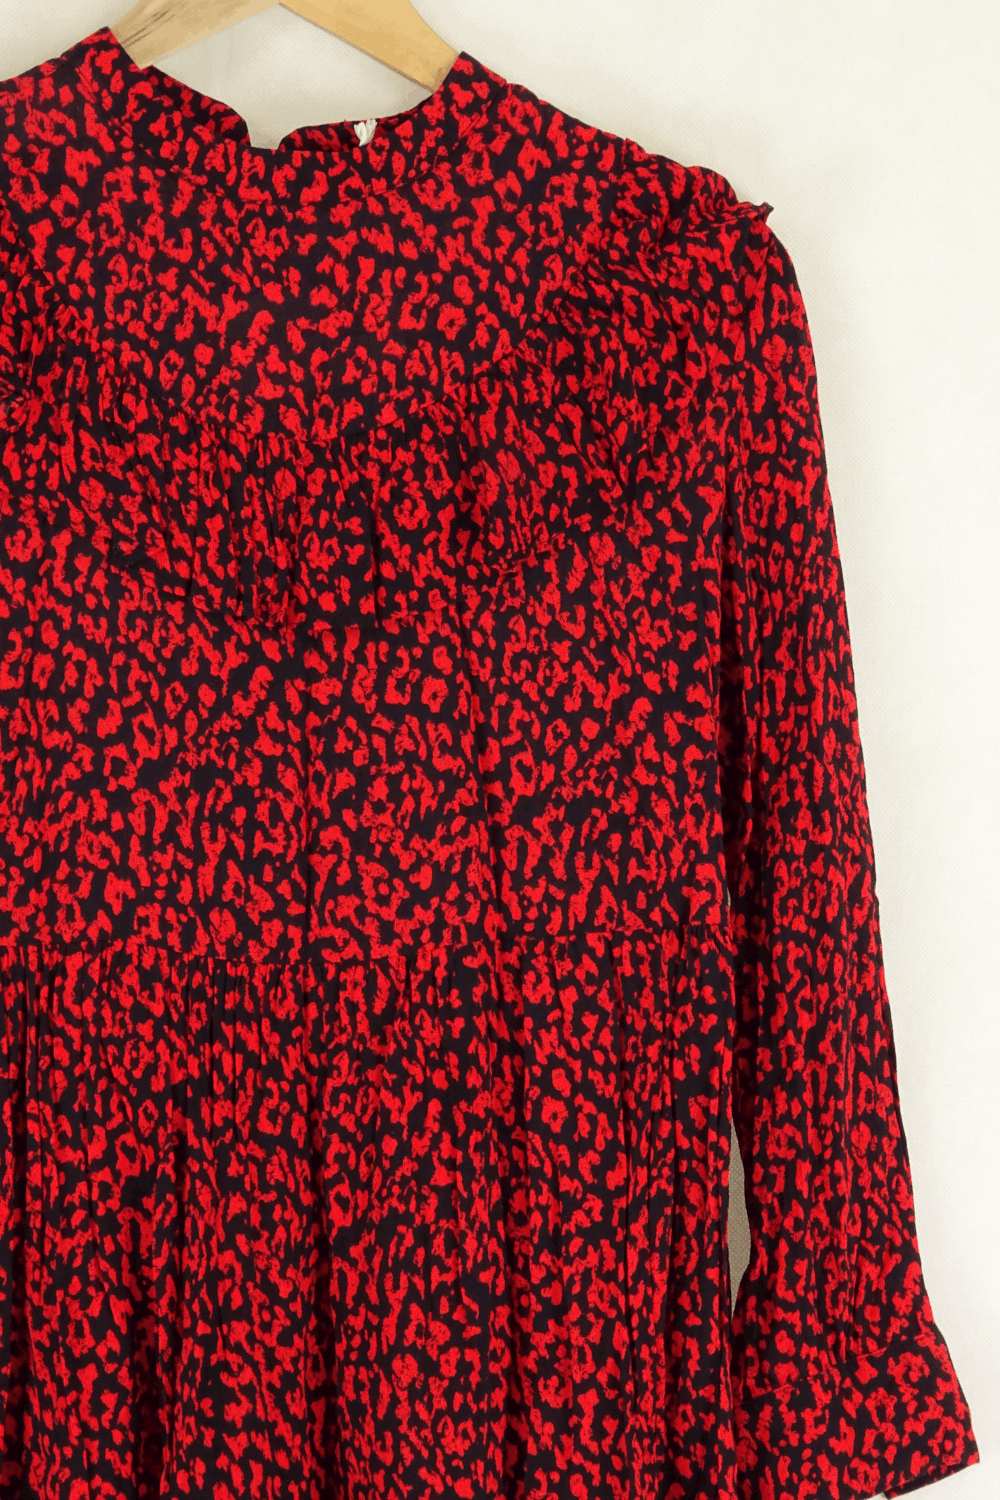 Zara Red Printed Dress Xs